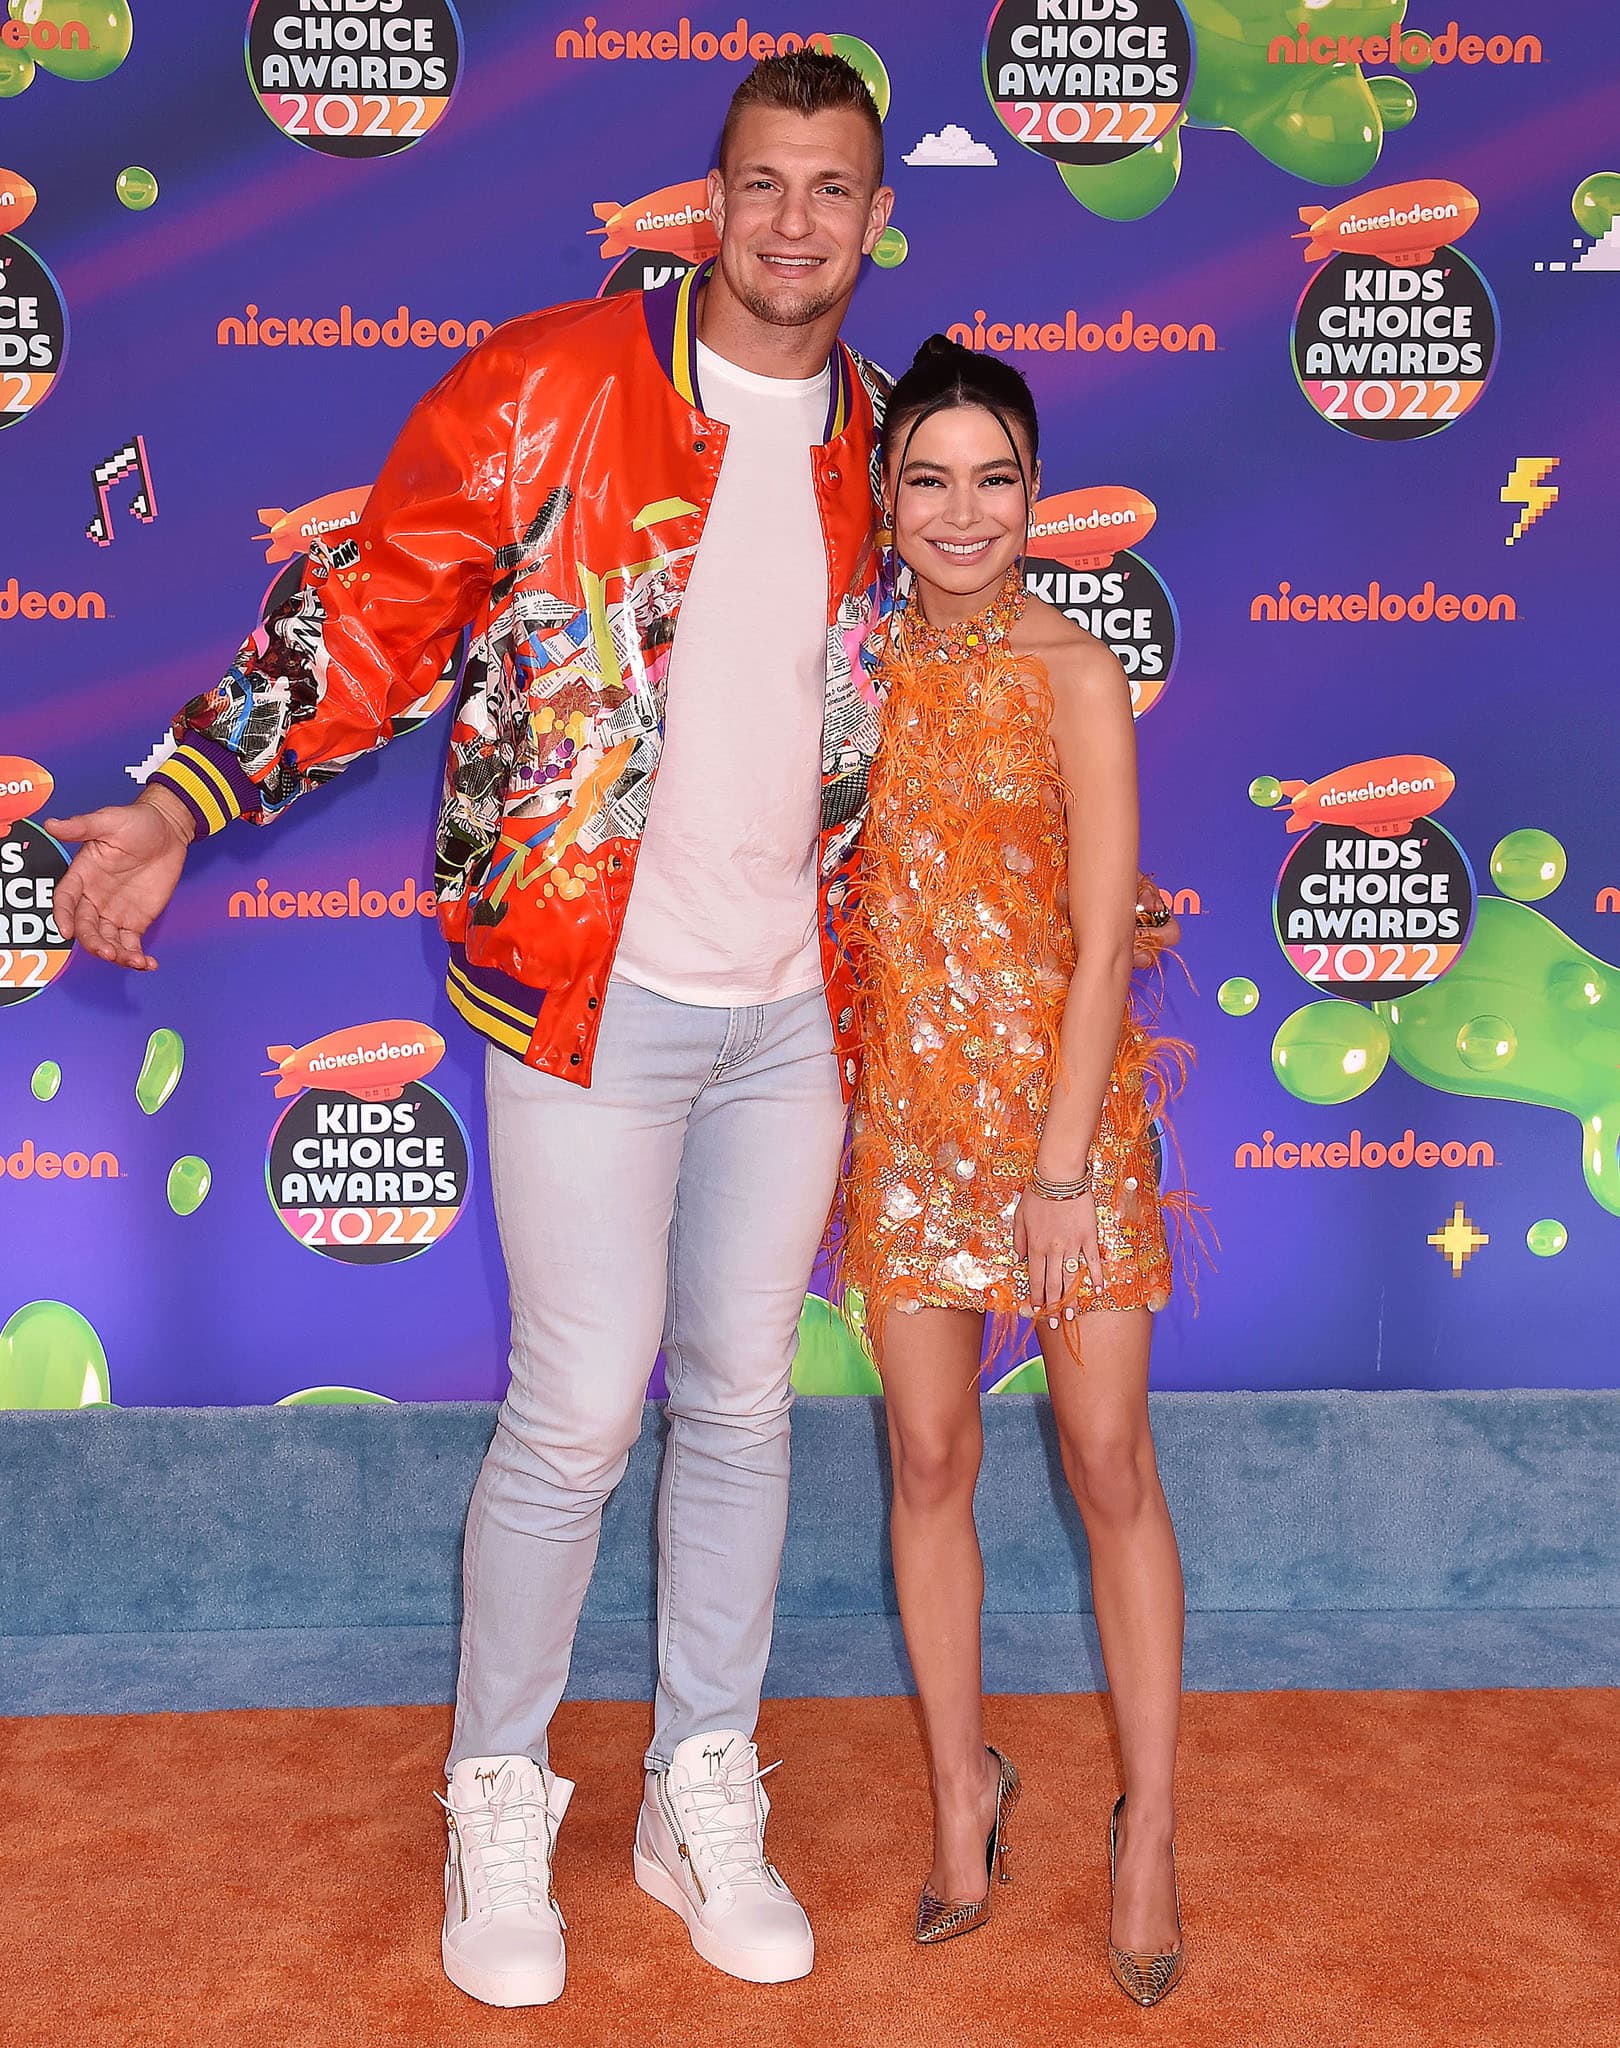 Kids Choice Awards 2022 hosts Rob Gronkowski and Miranda Cosgrove pose together on the orange carpet